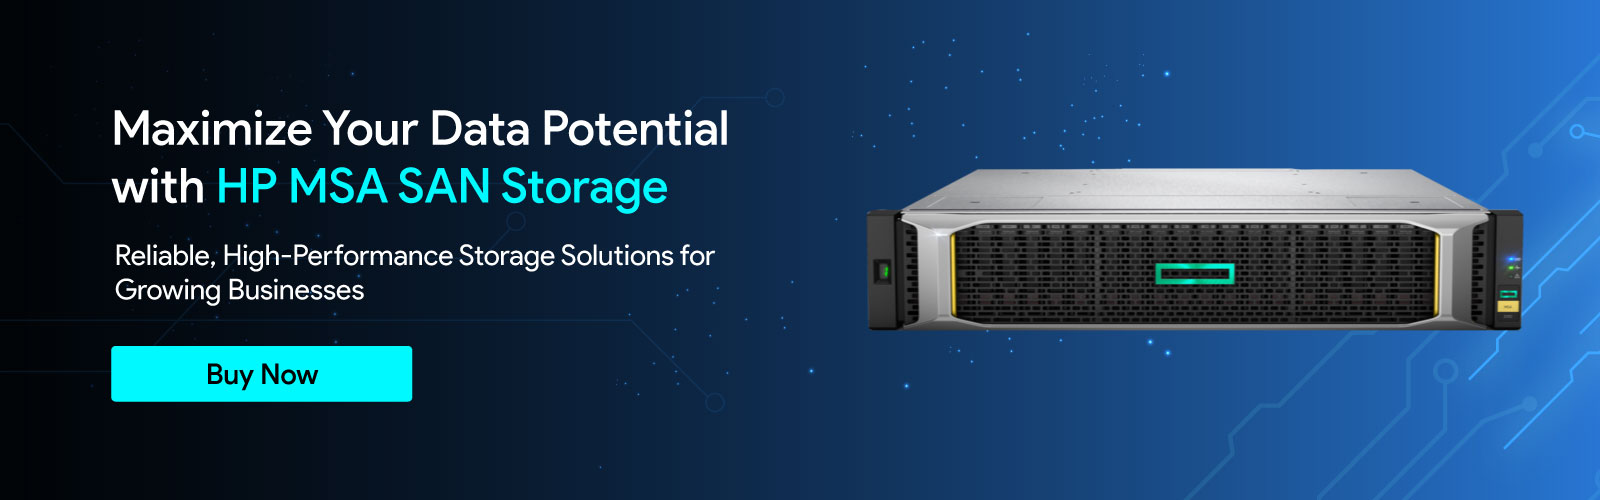 HP-MSA-SAN-Storage